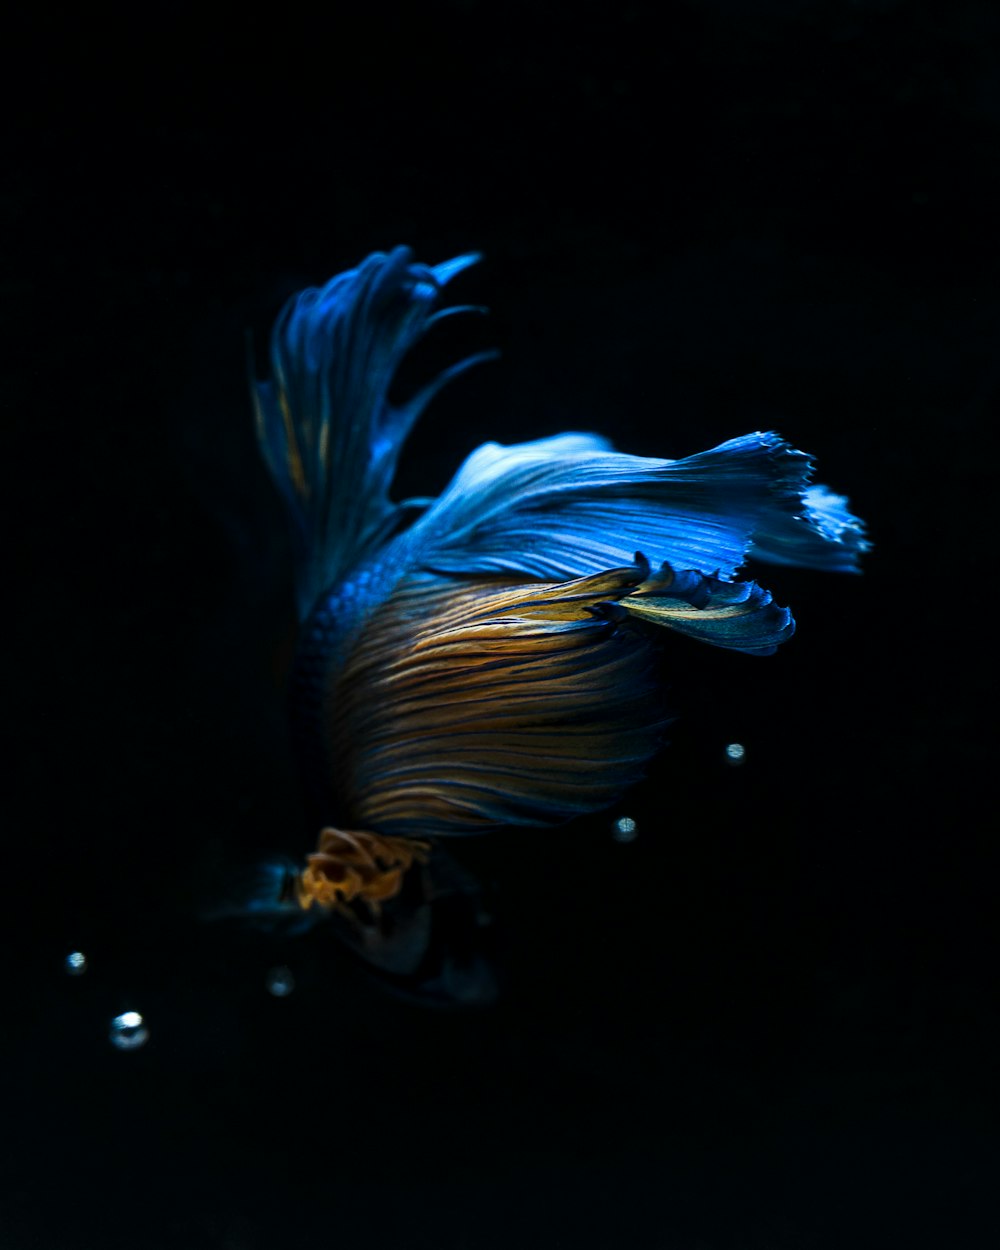 a siamese fish swimming in the dark water